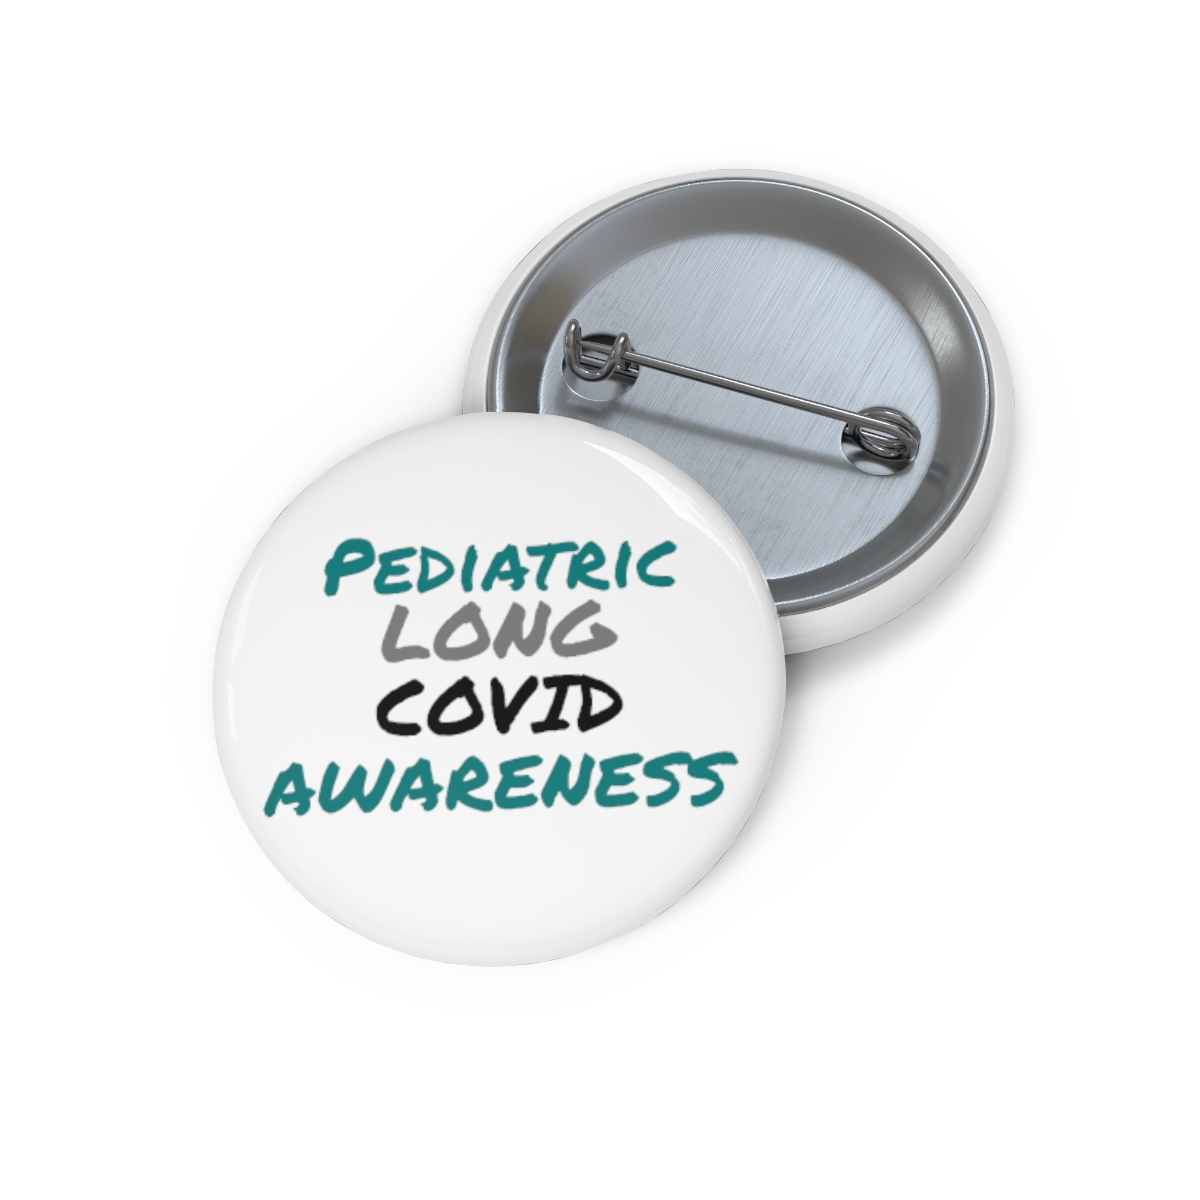 Pediatric Long COVID Awareness Pin Buttons product thumbnail image